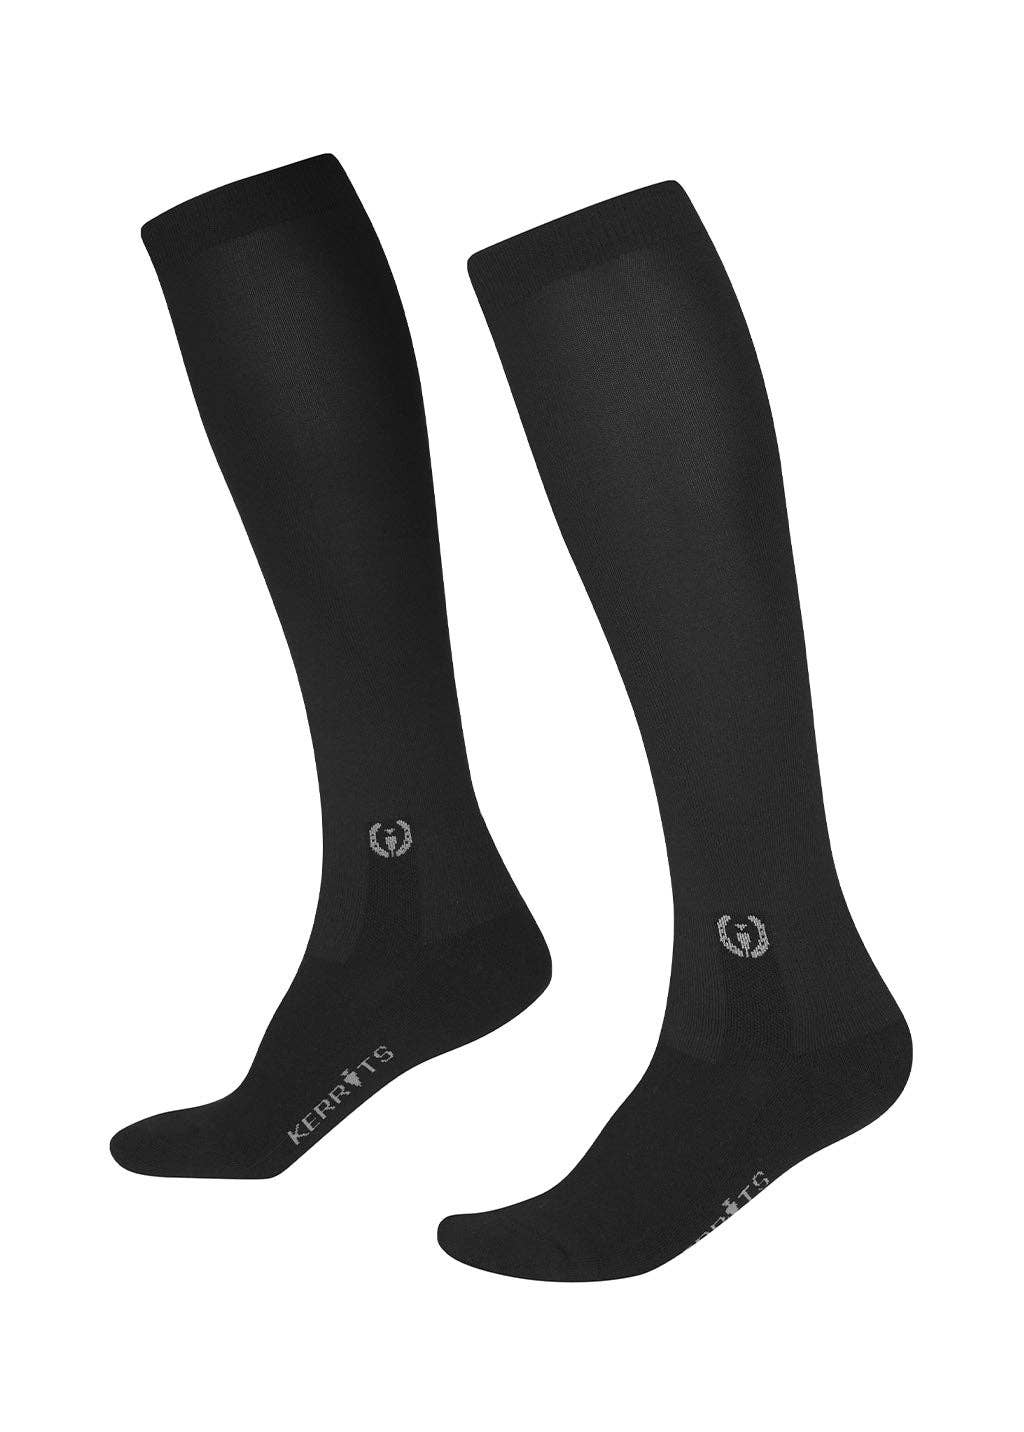 Dual Zone Boot Socks: BLACK / O/S